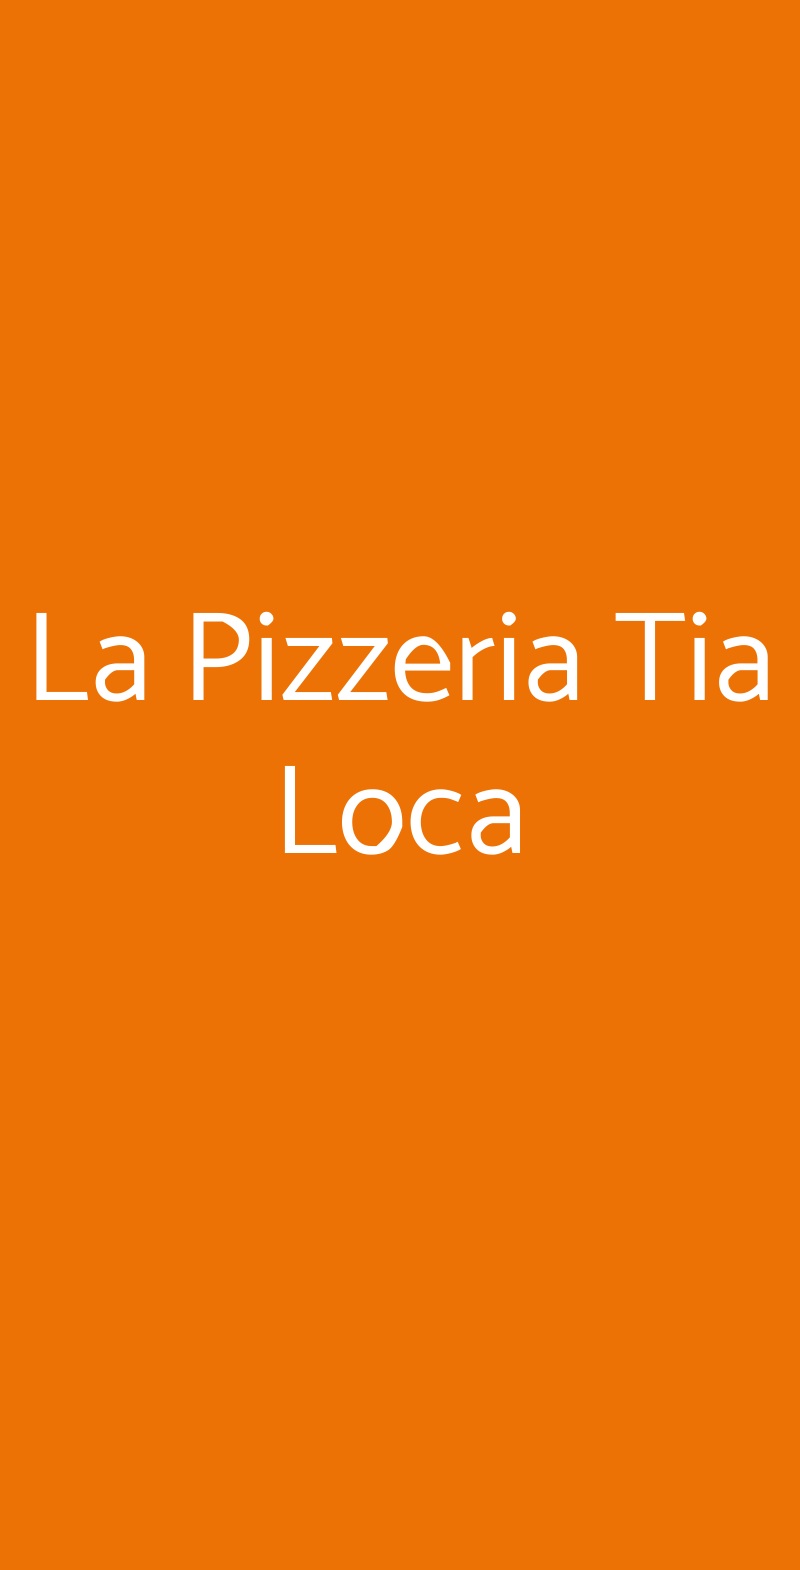 La Pizzeria Tia Loca Siena menù 1 pagina